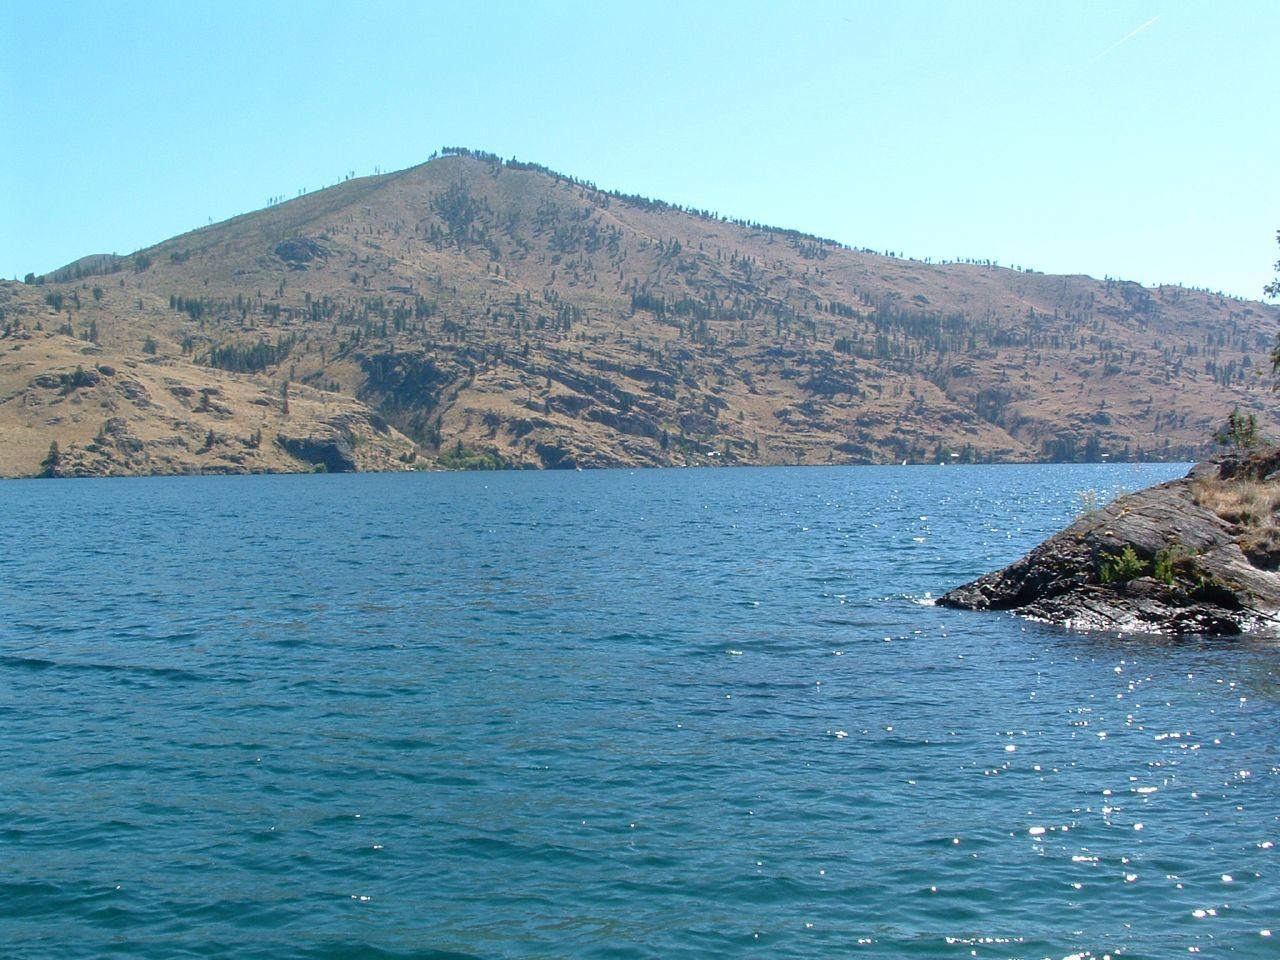 Sandee - Lake Chelan State Park